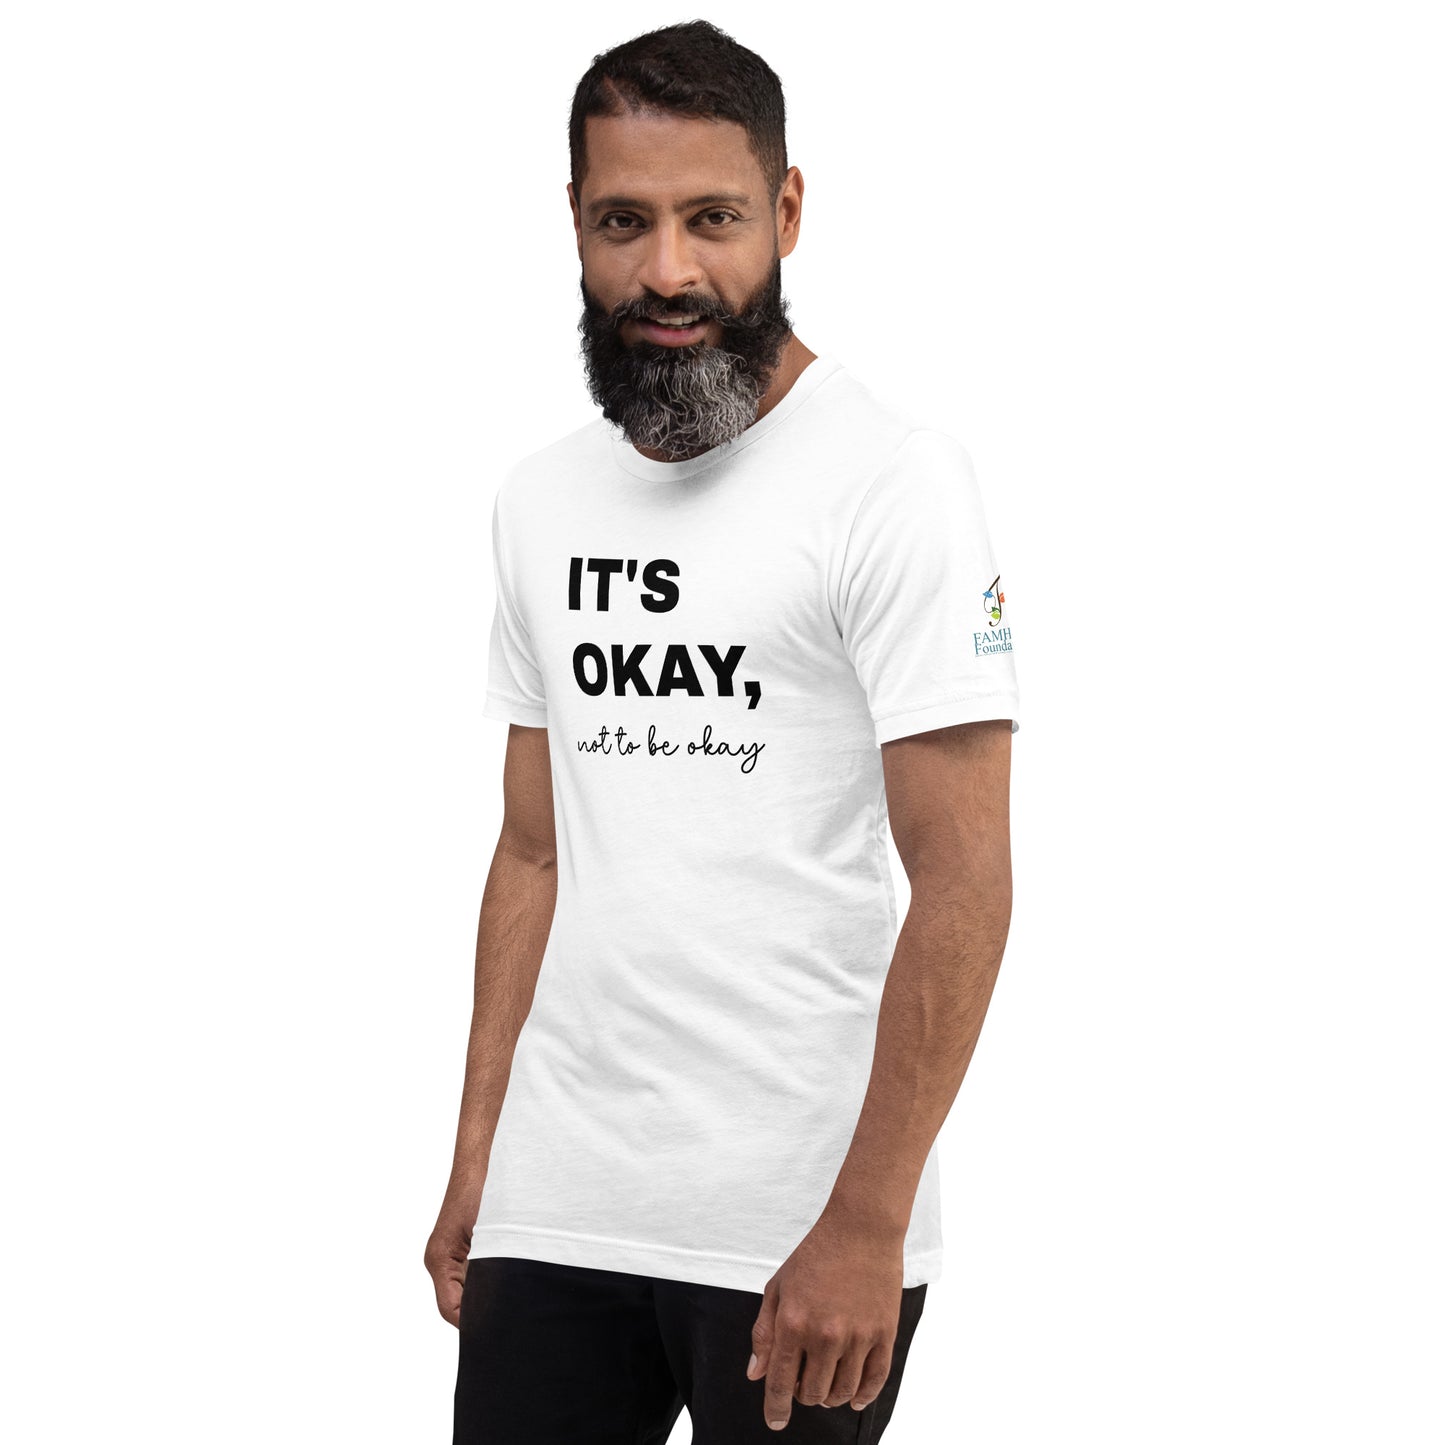 It's okay not to be okay t-shirt